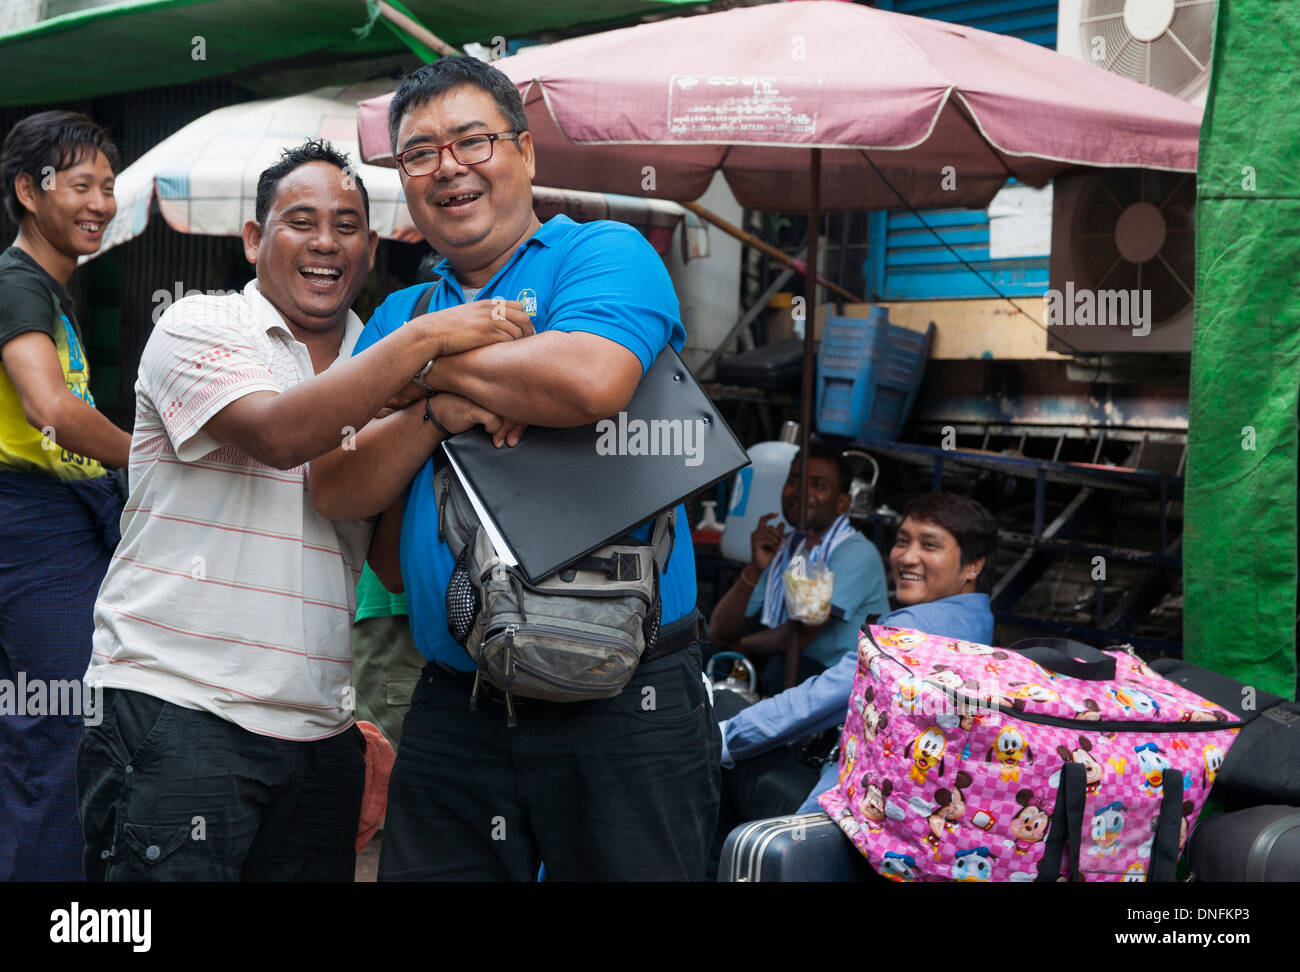 Two Burmese men sharing a joke and smiling at the camera in Yangon street, Myanmar. Stock Photo